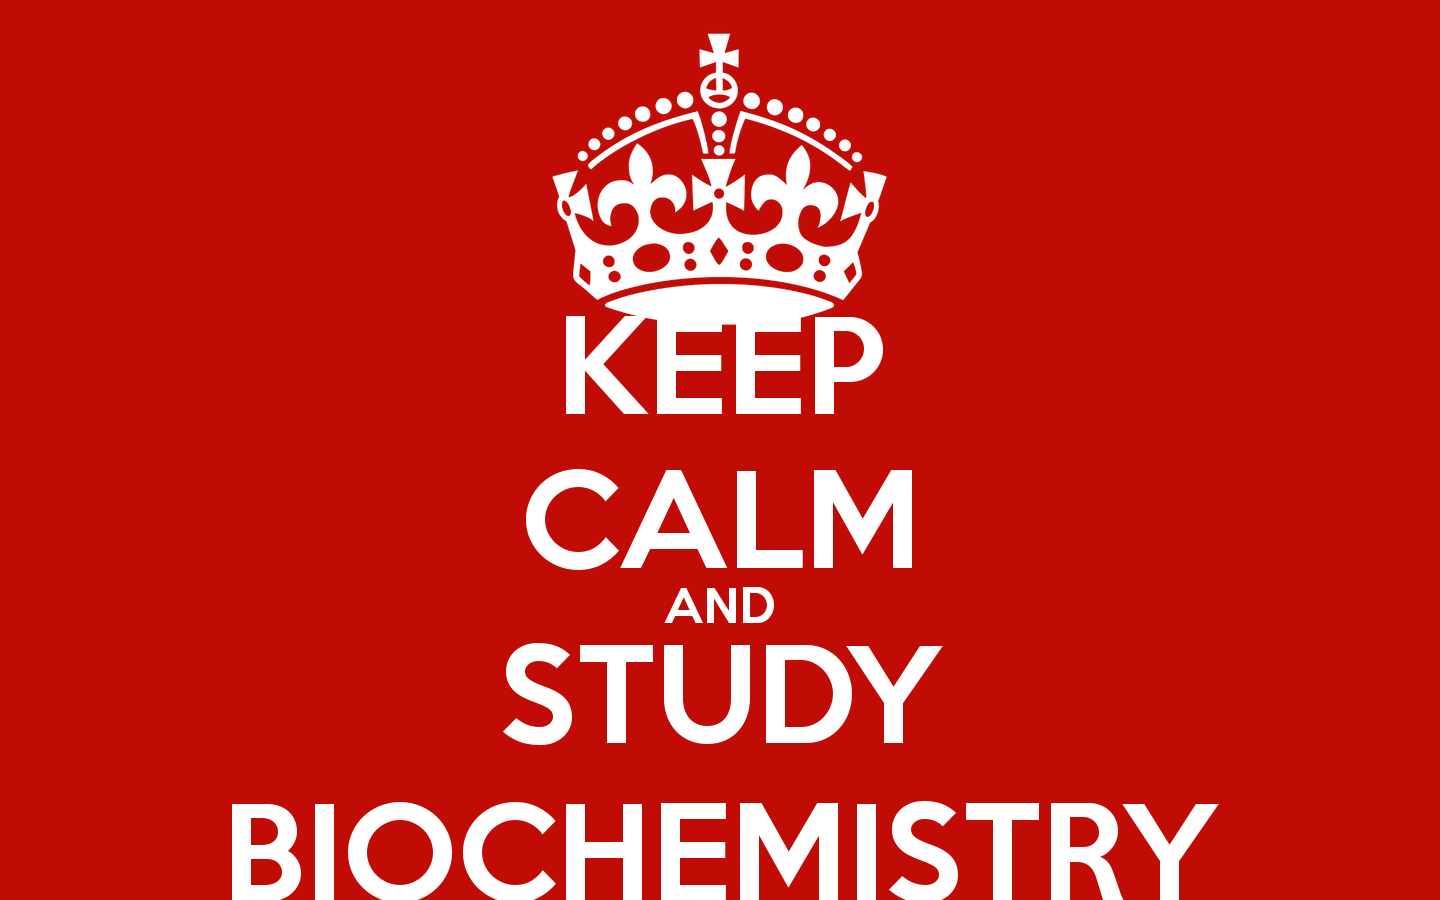 Biochemistry wallpaper